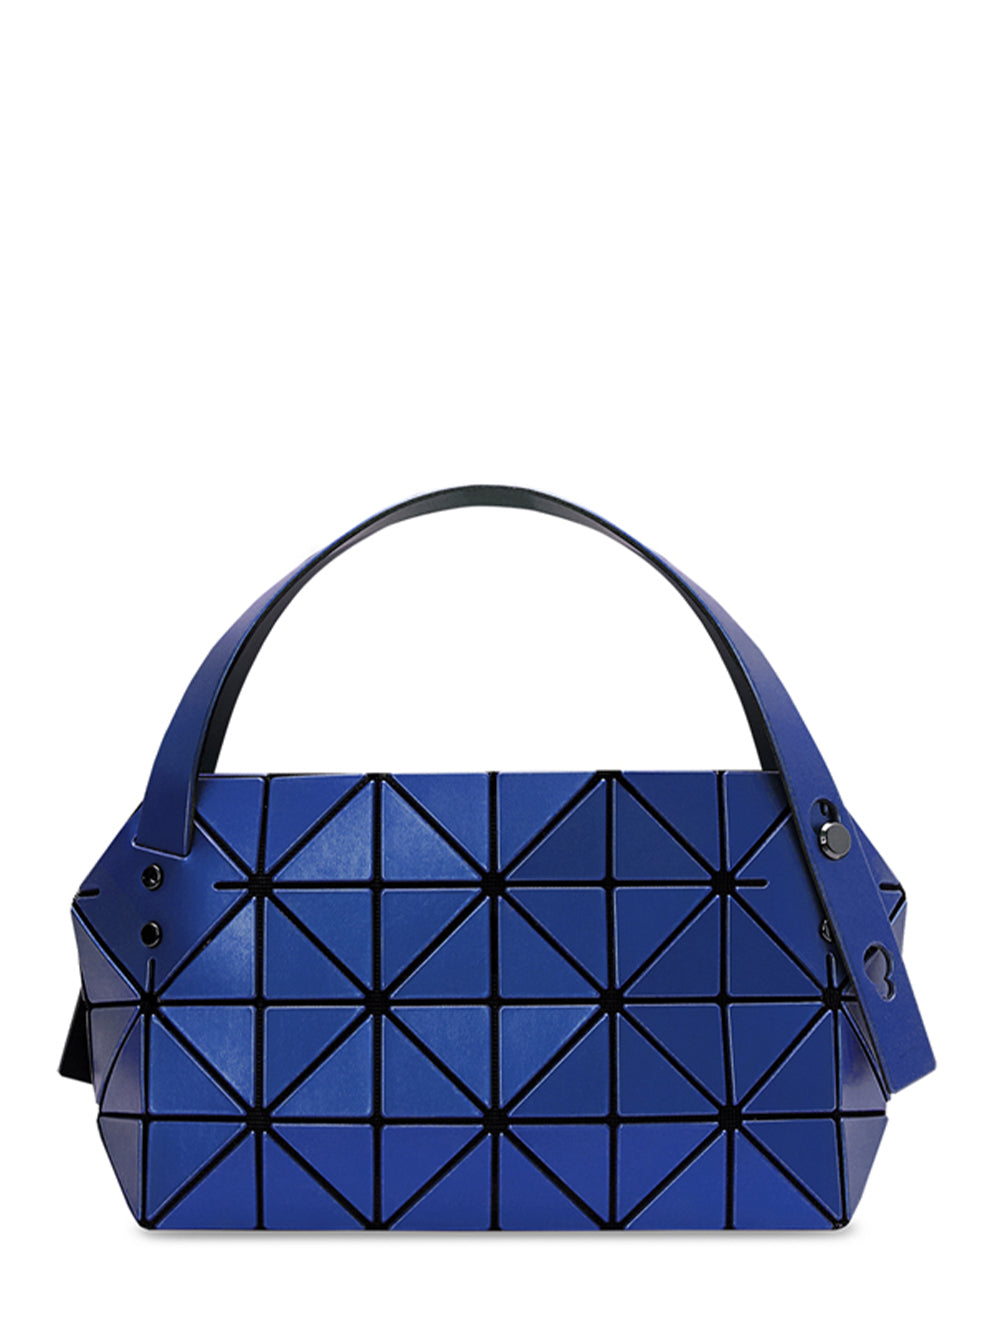 BOSTON Shoulder Bag (Small) (Royal Blue)